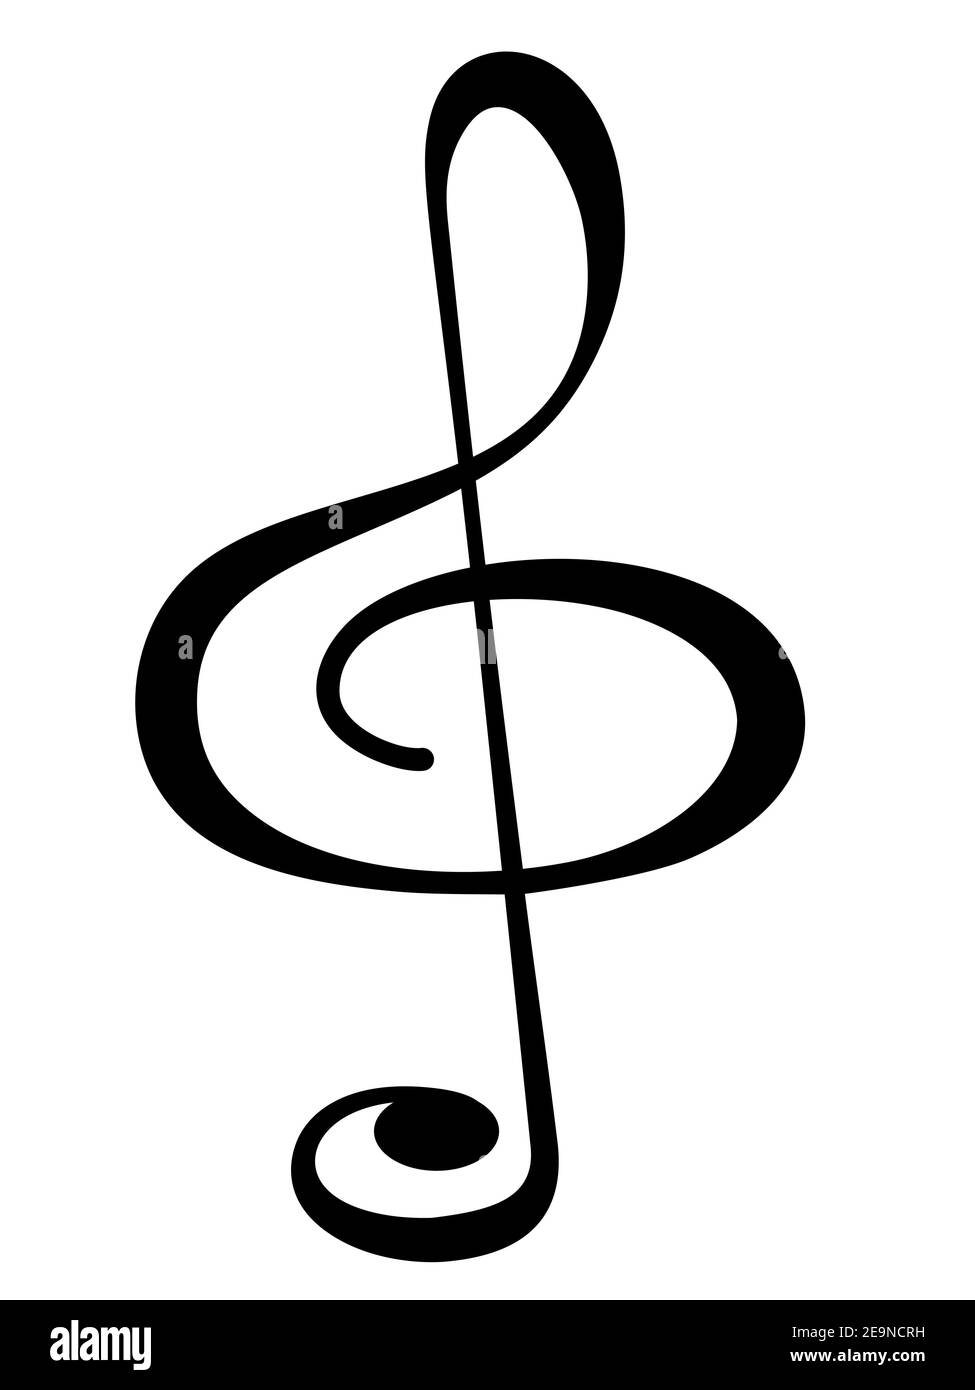 Illustration of the treble clef symbol Stock Vector